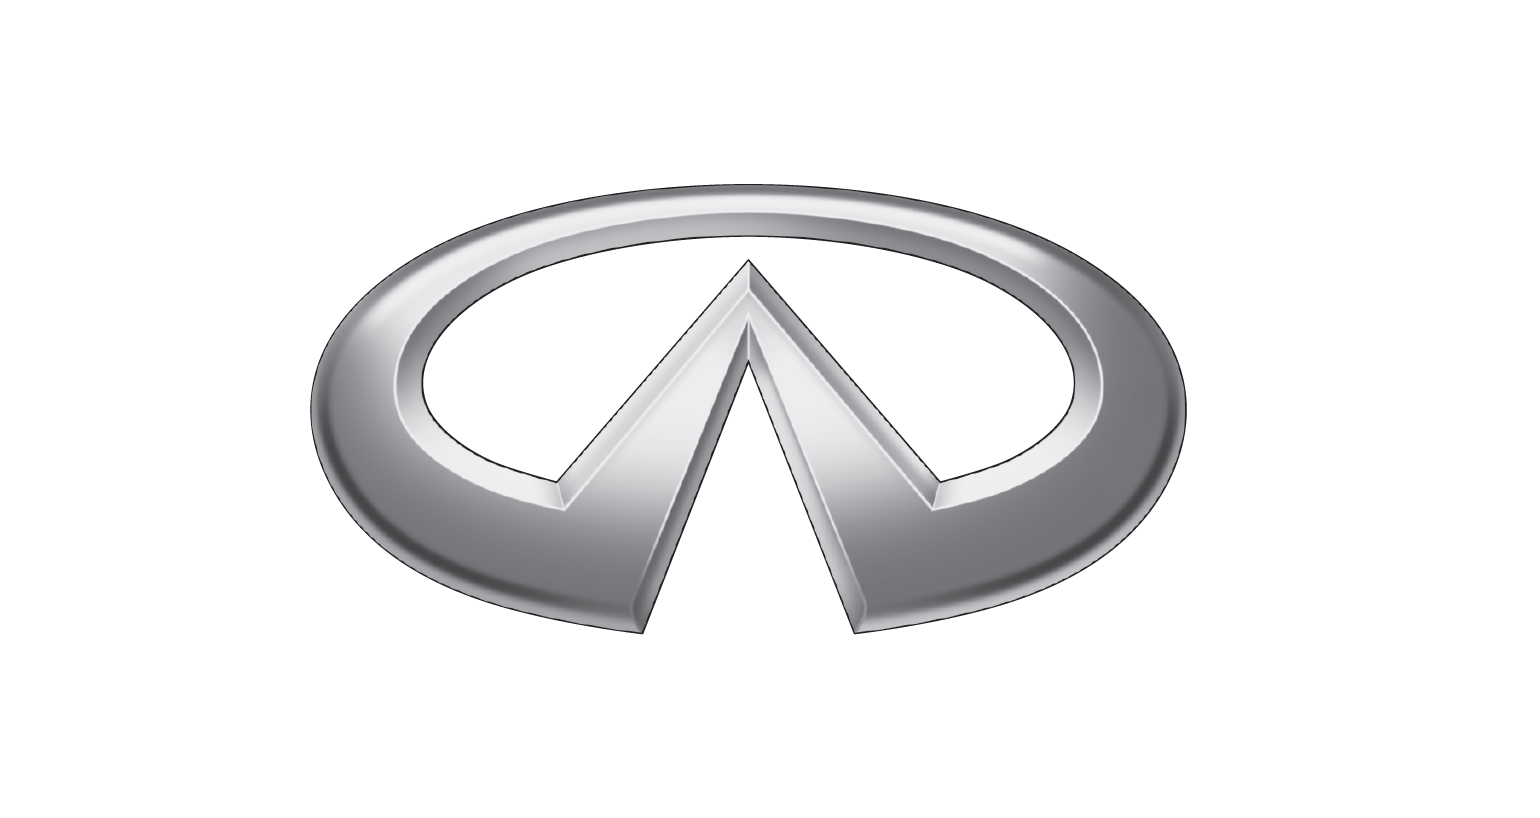 Silver Oval Car Logo - Infiniti Logo, Infiniti Car Symbol Meaning and History. Car Brand